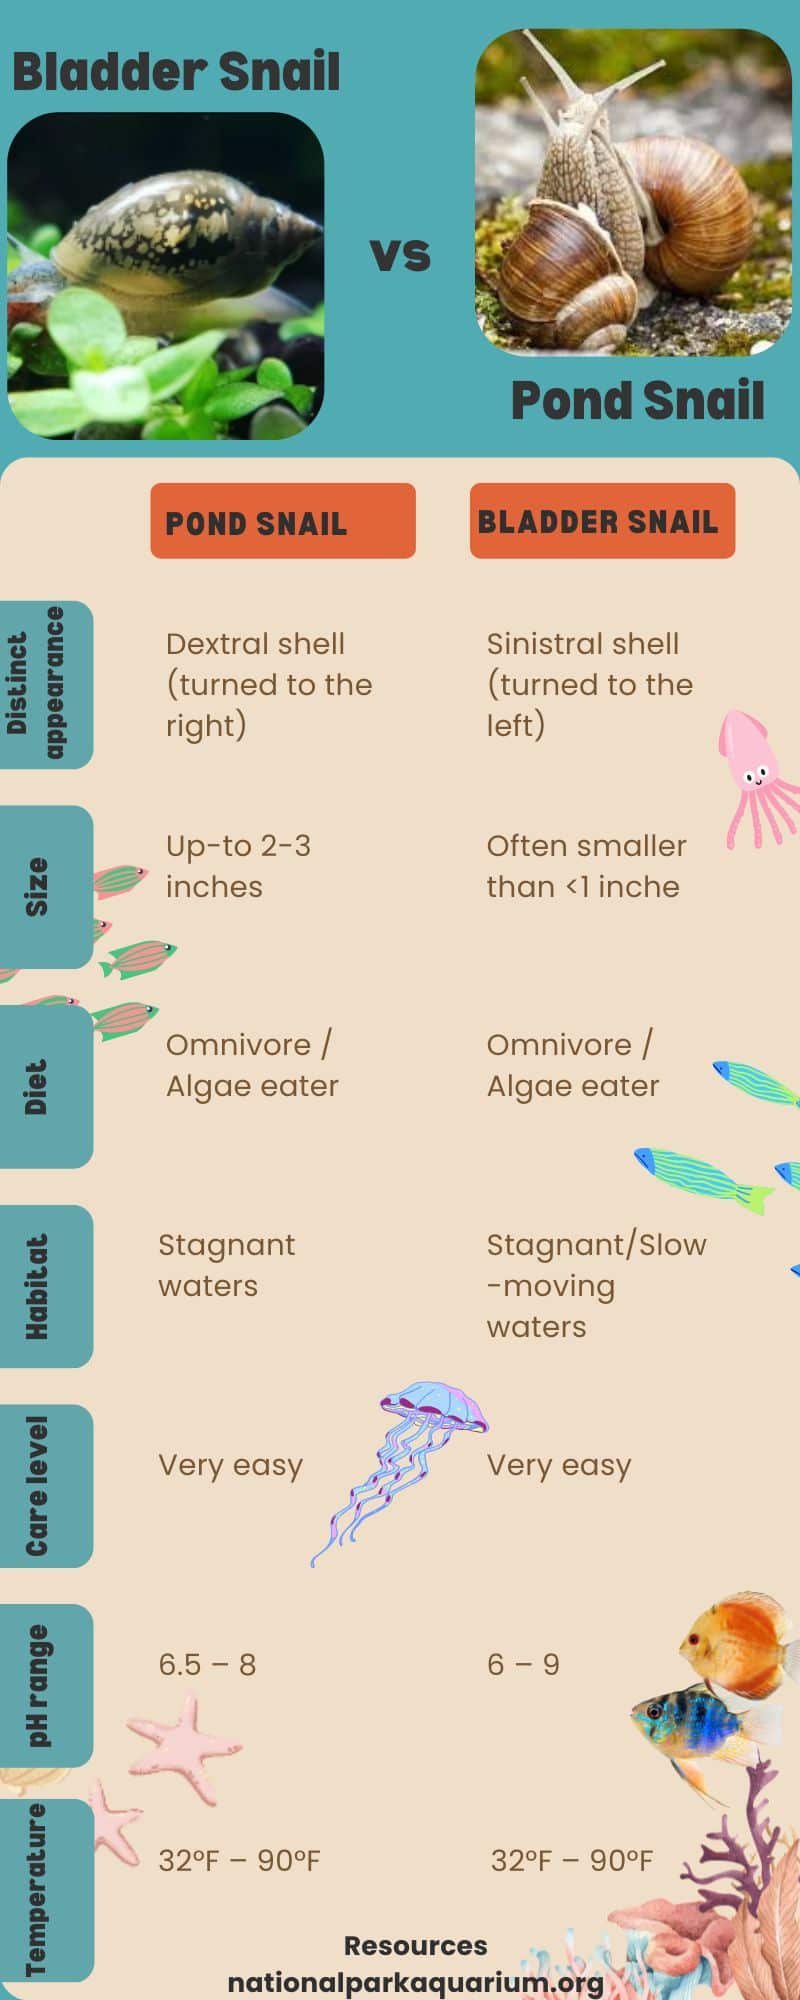 bladder snail vs pond snail